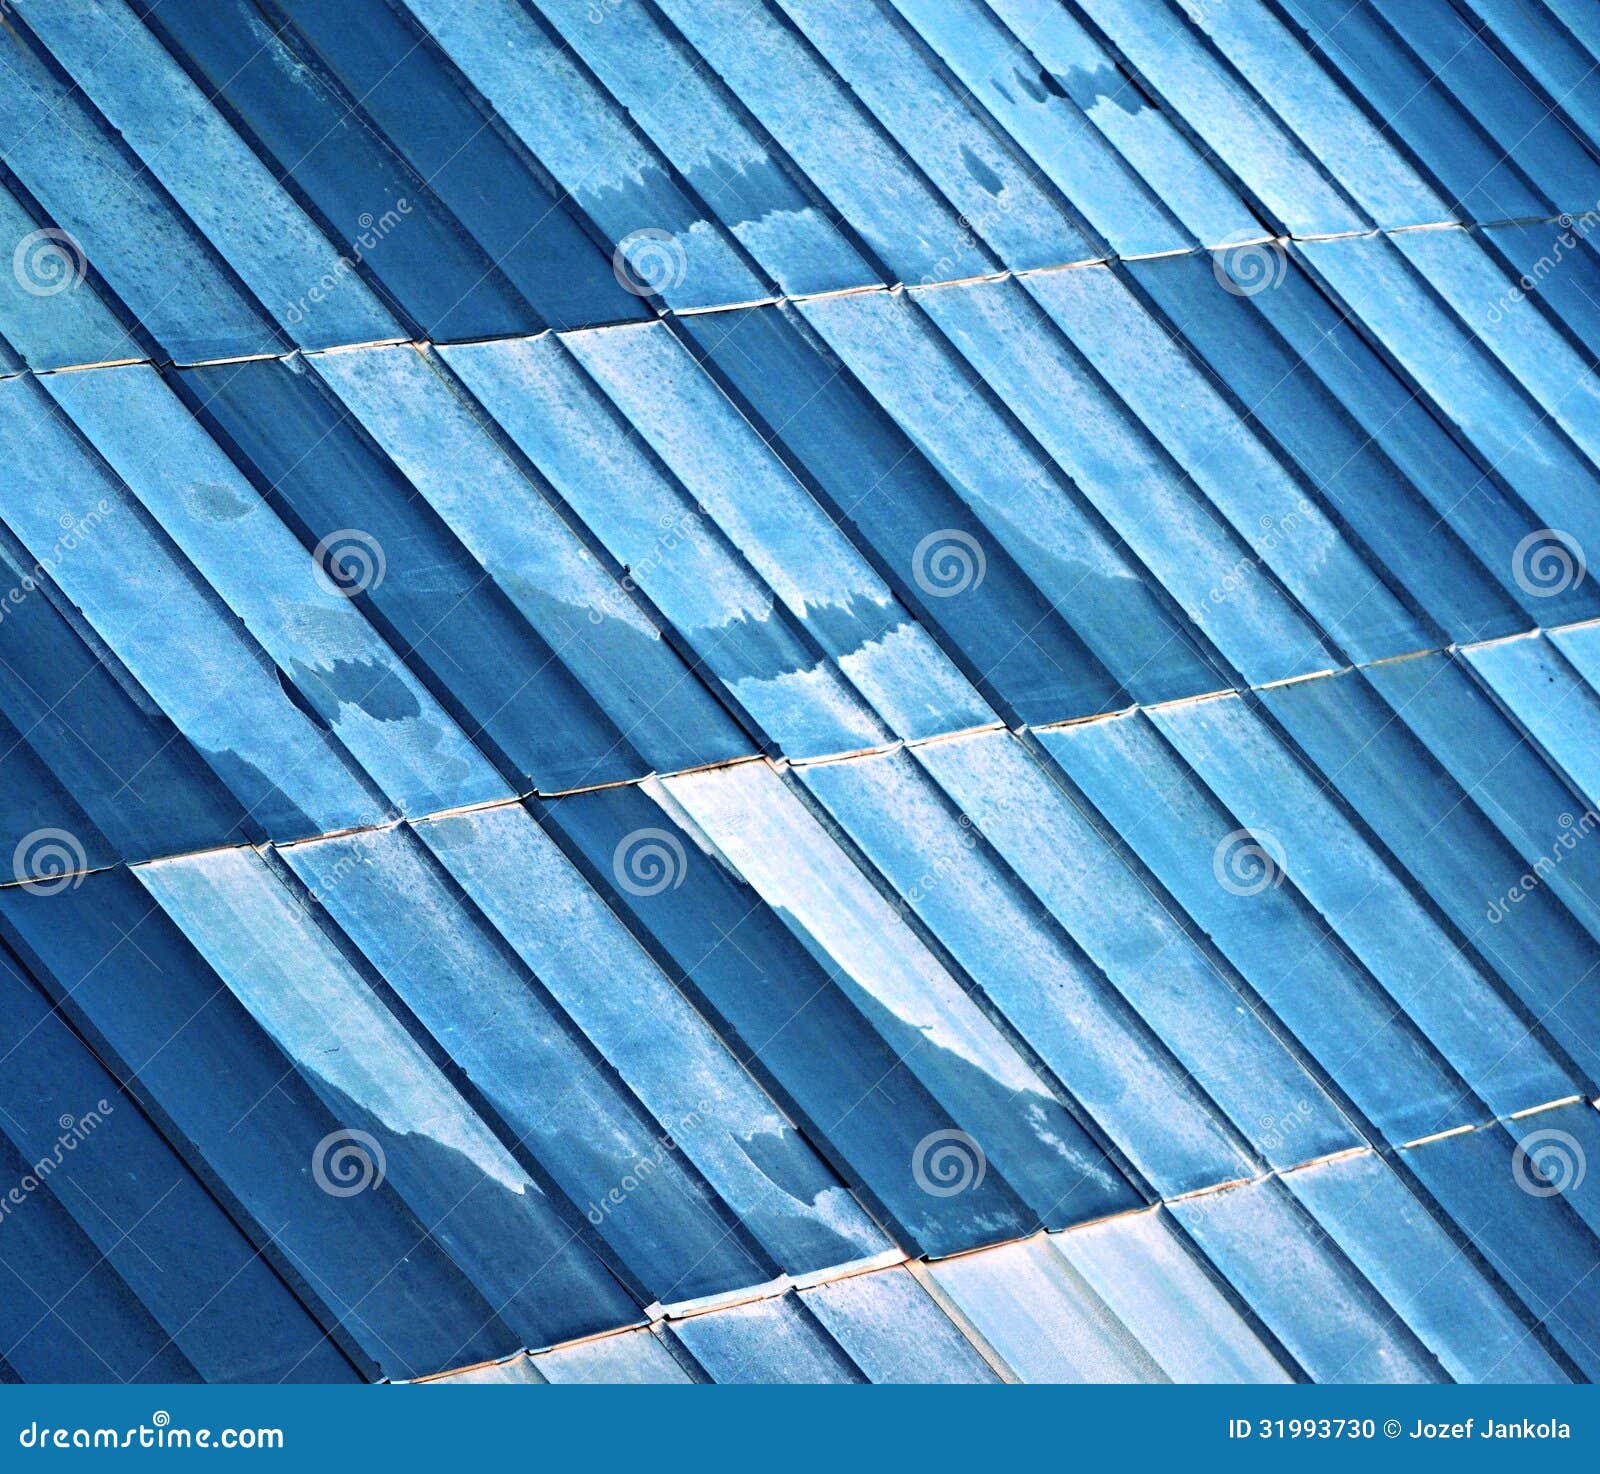 Old metal roof stock photo. Image of pattern, steel, detail - 31993730